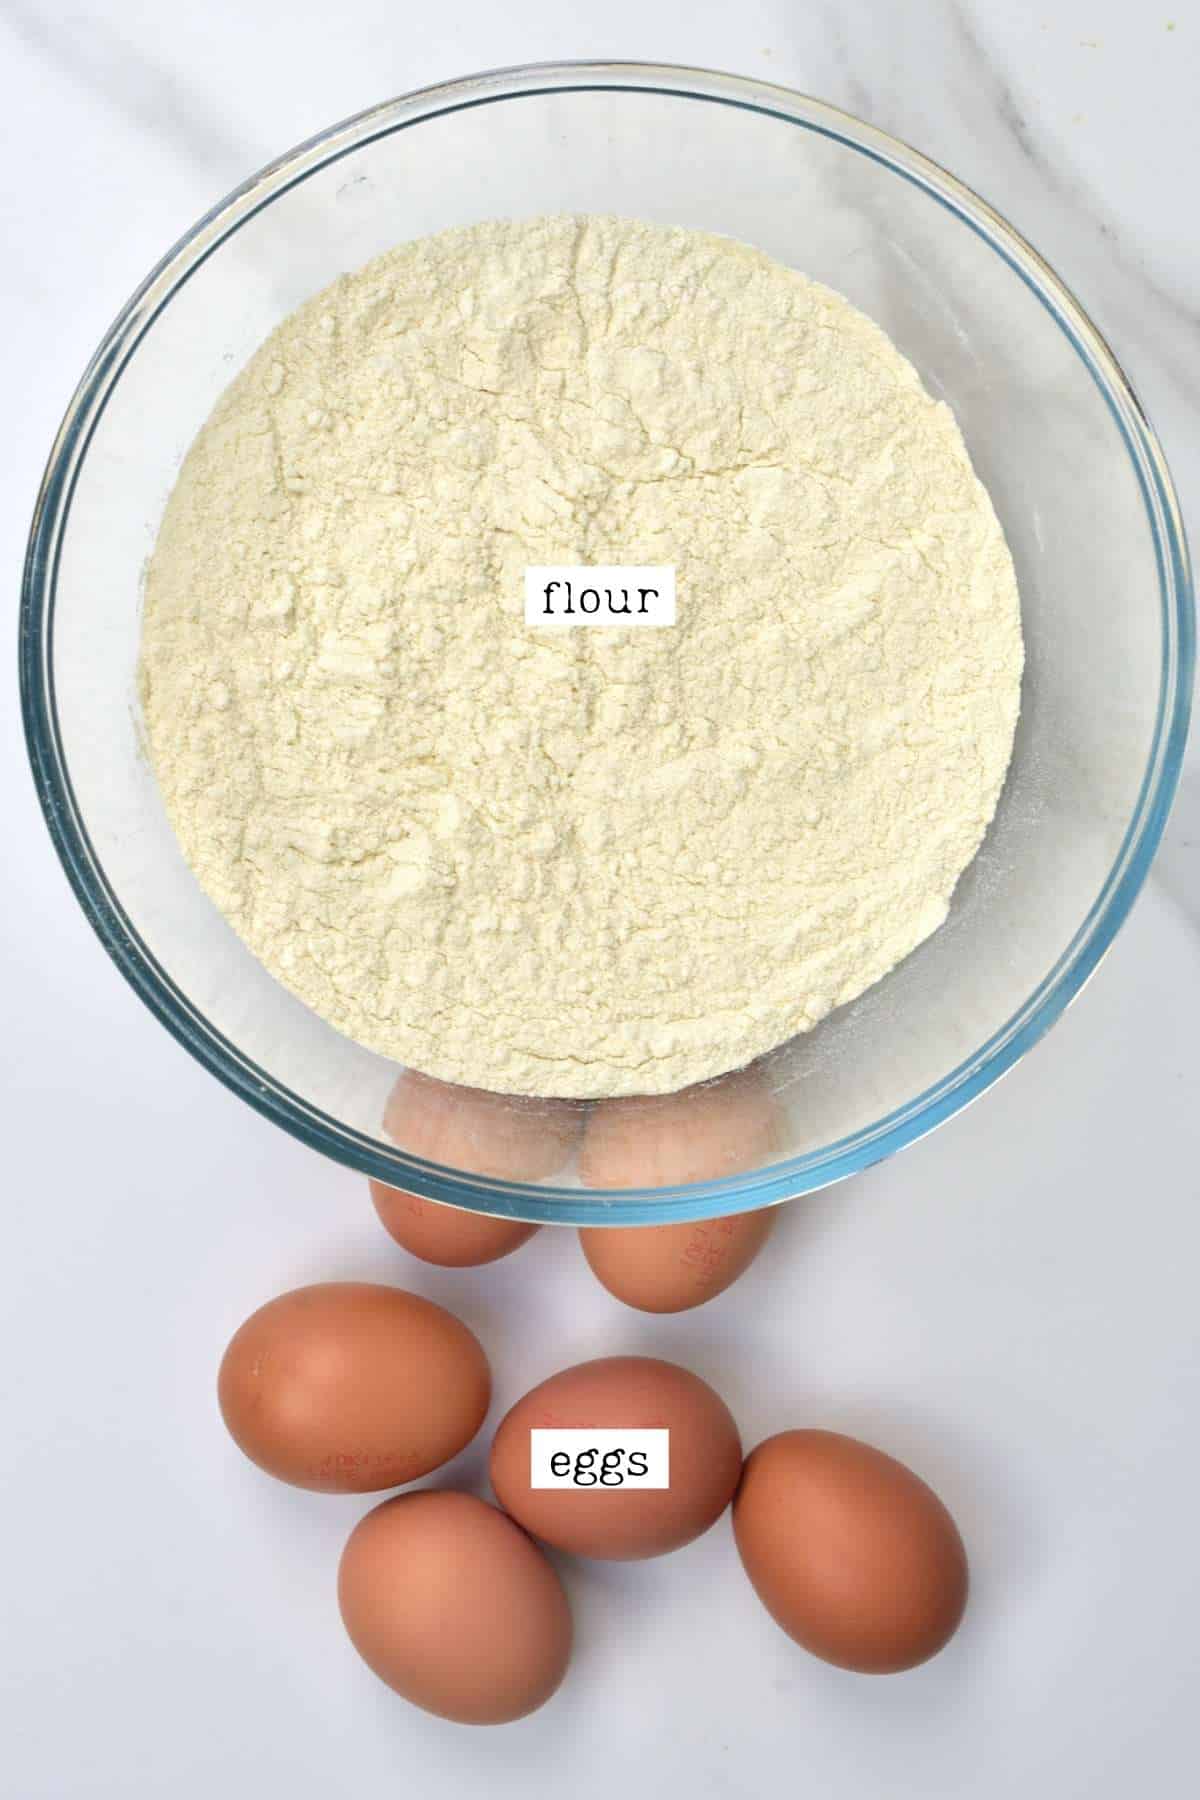 Ingredients for egg pasta